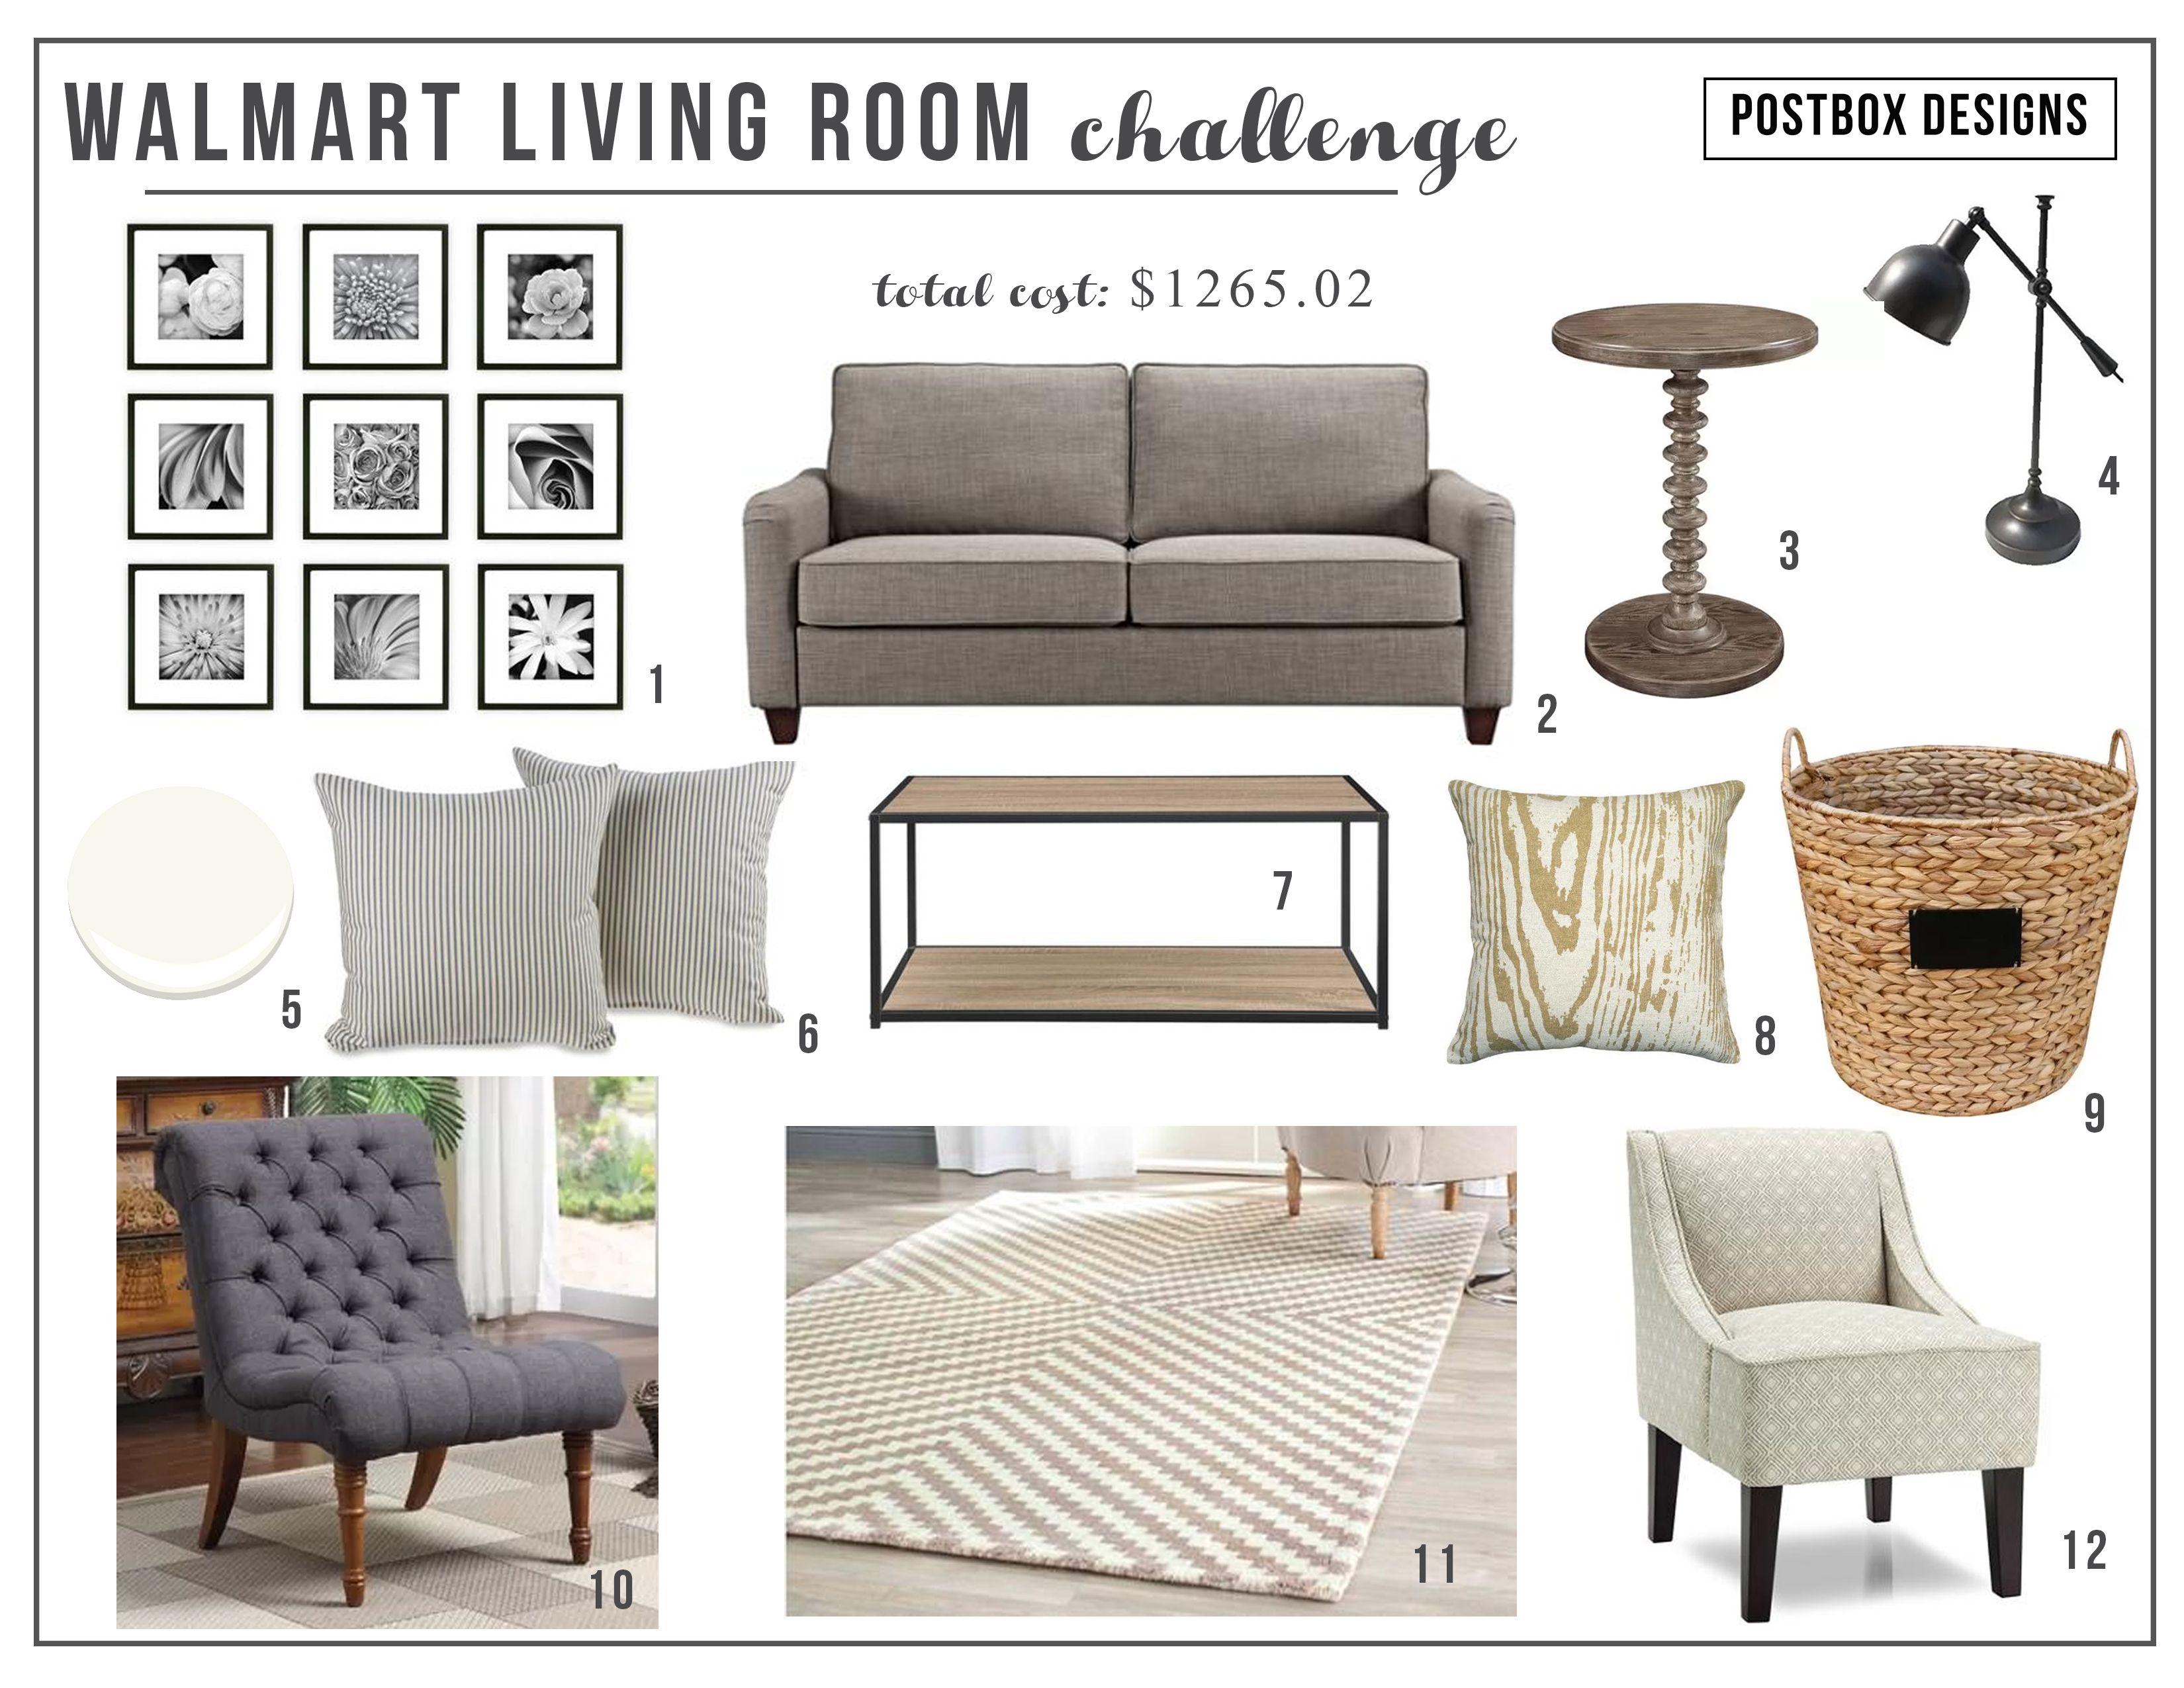 Walmart Living Room Budget Design Challenge Postbox Designs